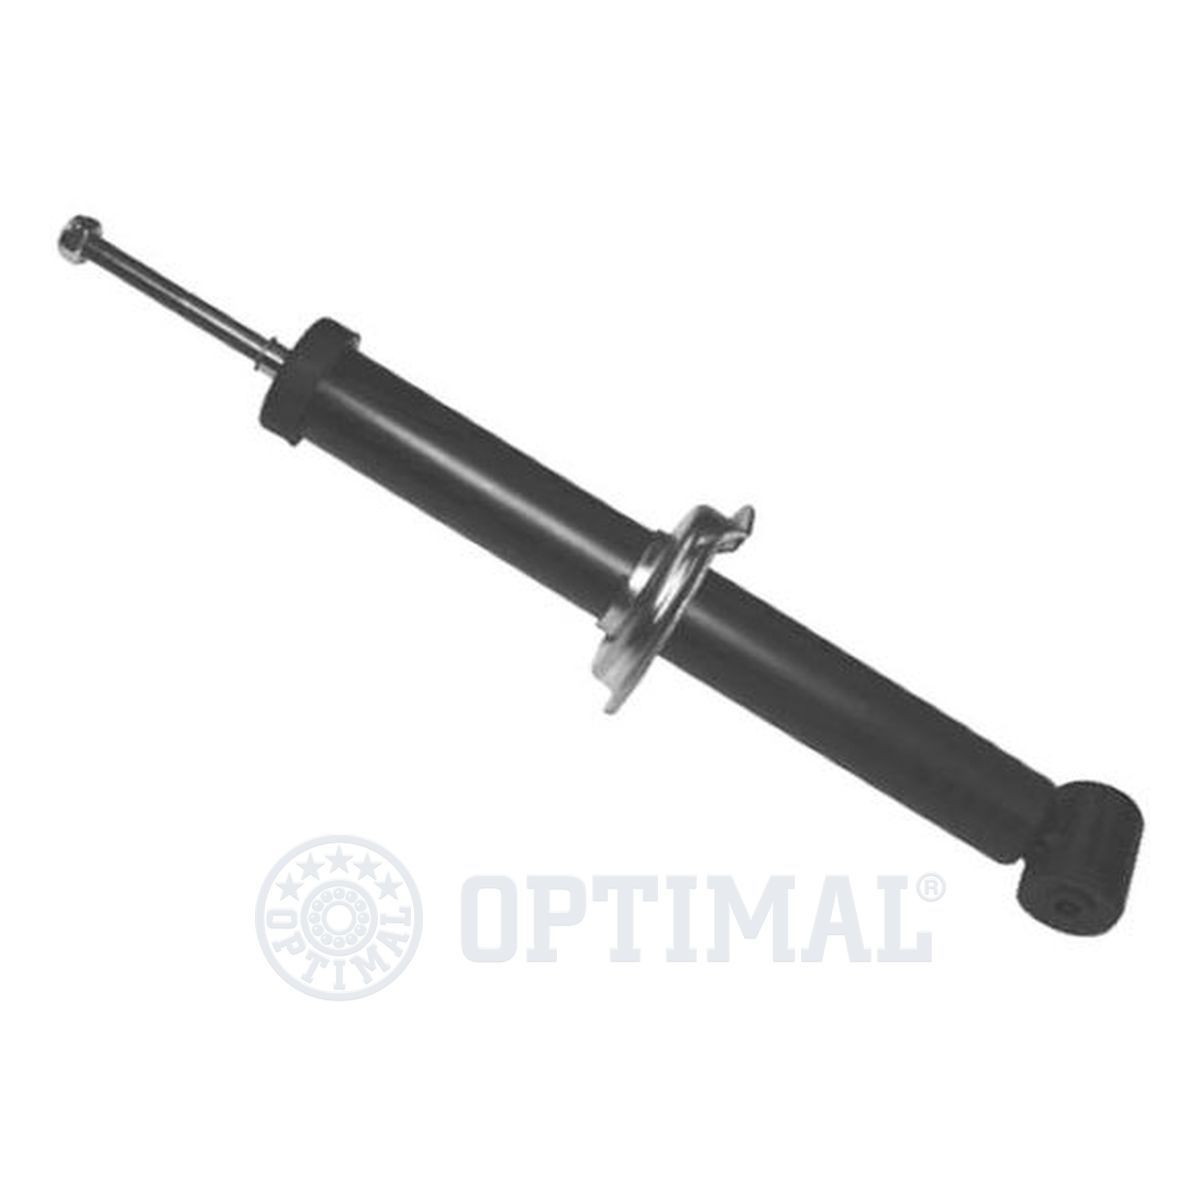 OPTIMAL A-1786H Shock absorber Rear Axle, Oil Pressure, Twin-Tube, Spring-bearing Damper, Bottom eye, Top pin, M10x1